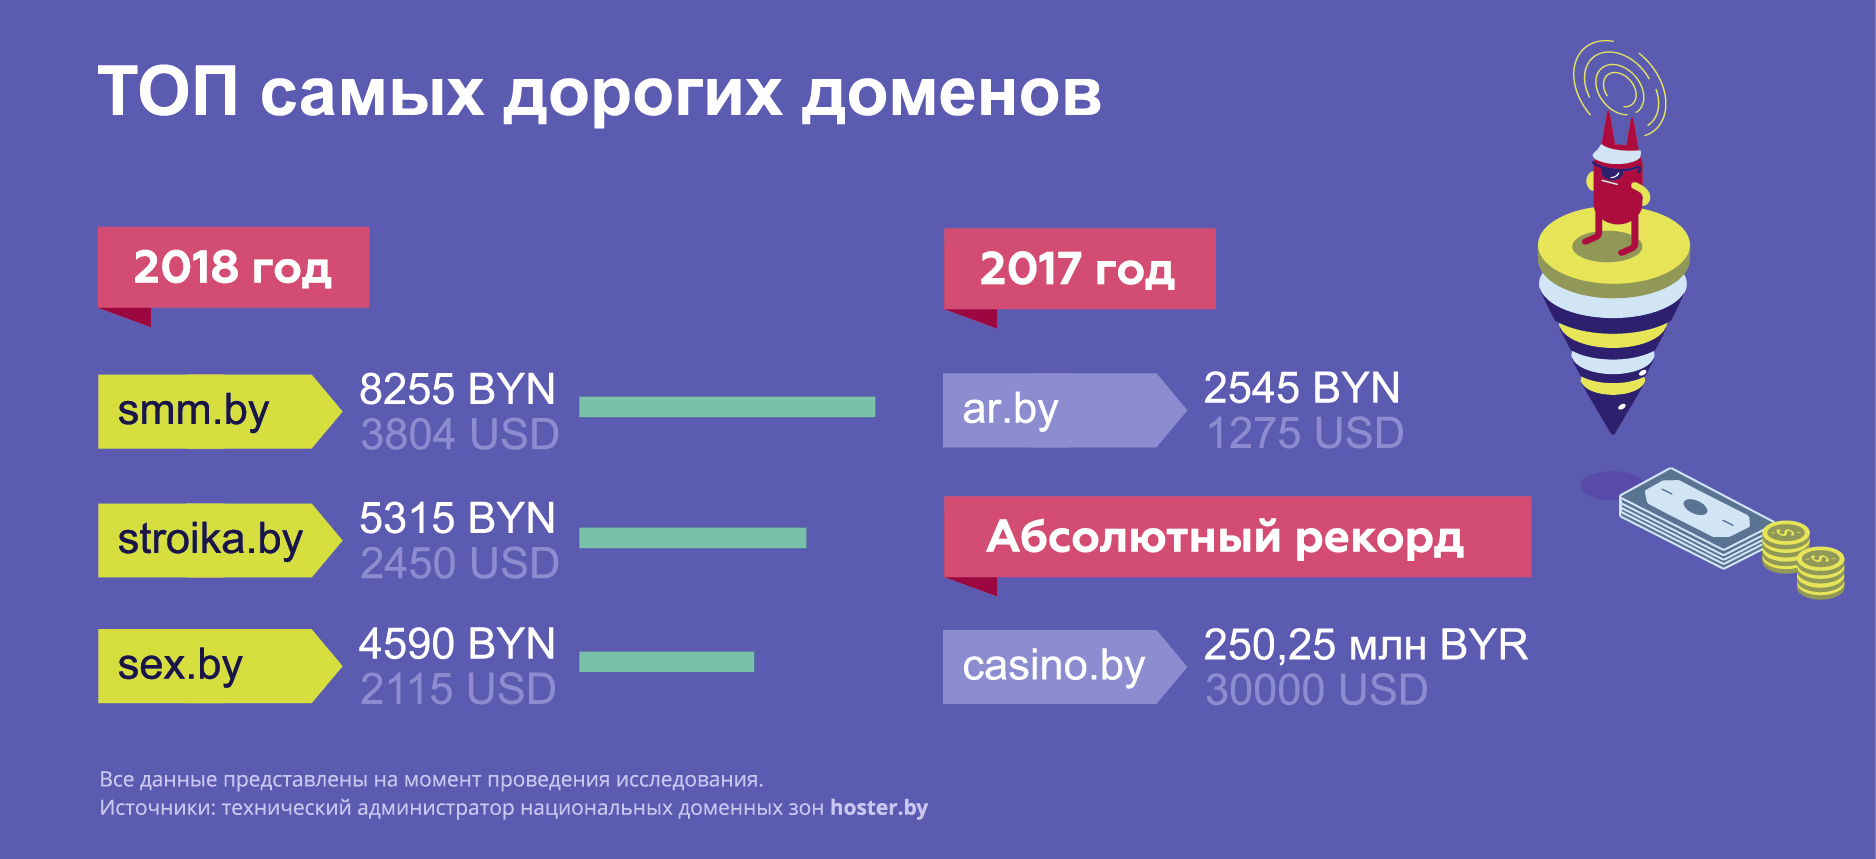 Байнет-2018: итоги года в картинках